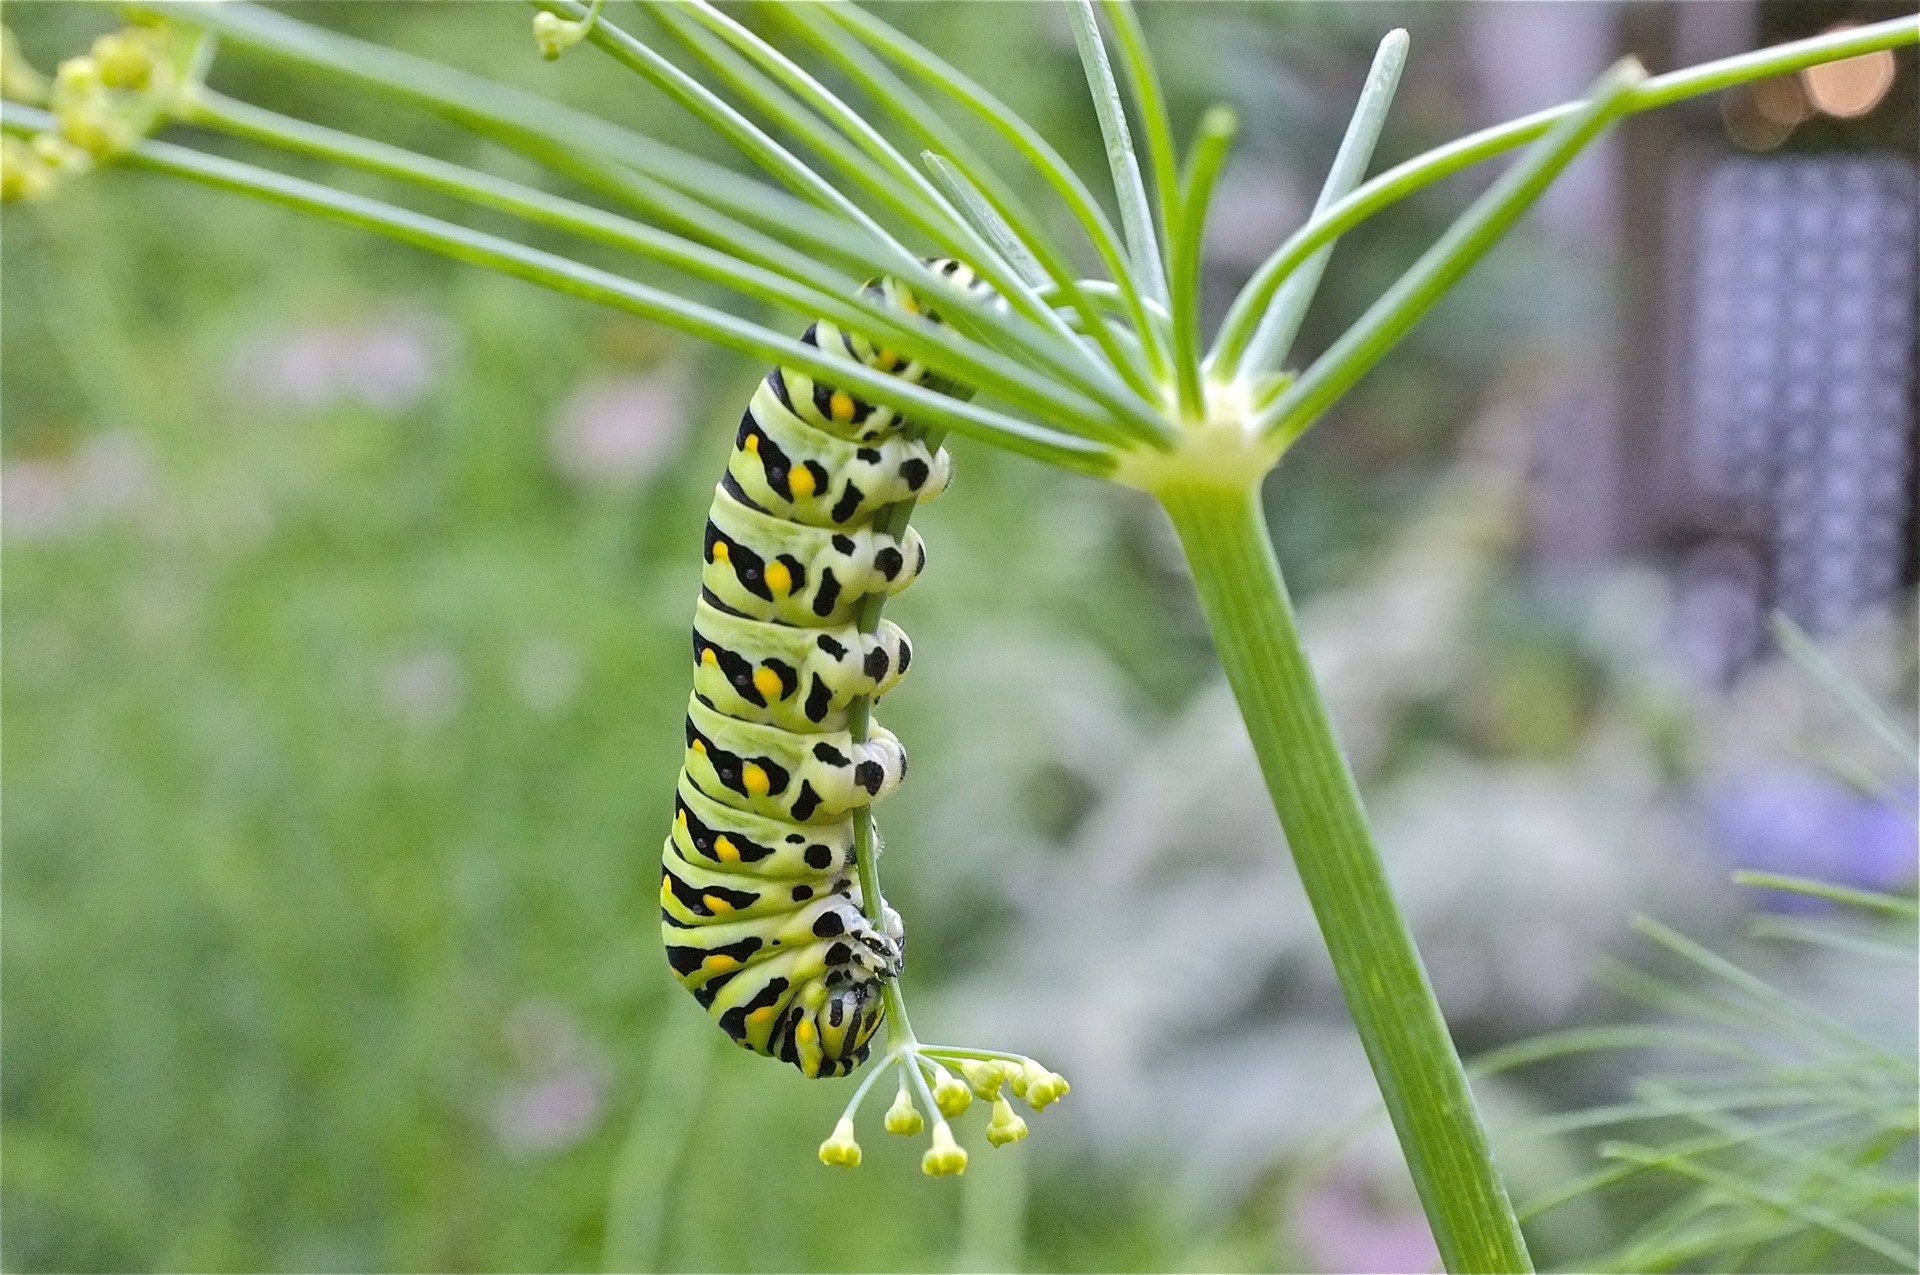 General 1920x1275 caterpillars insect garden plants closeup macro outdoors depth of field